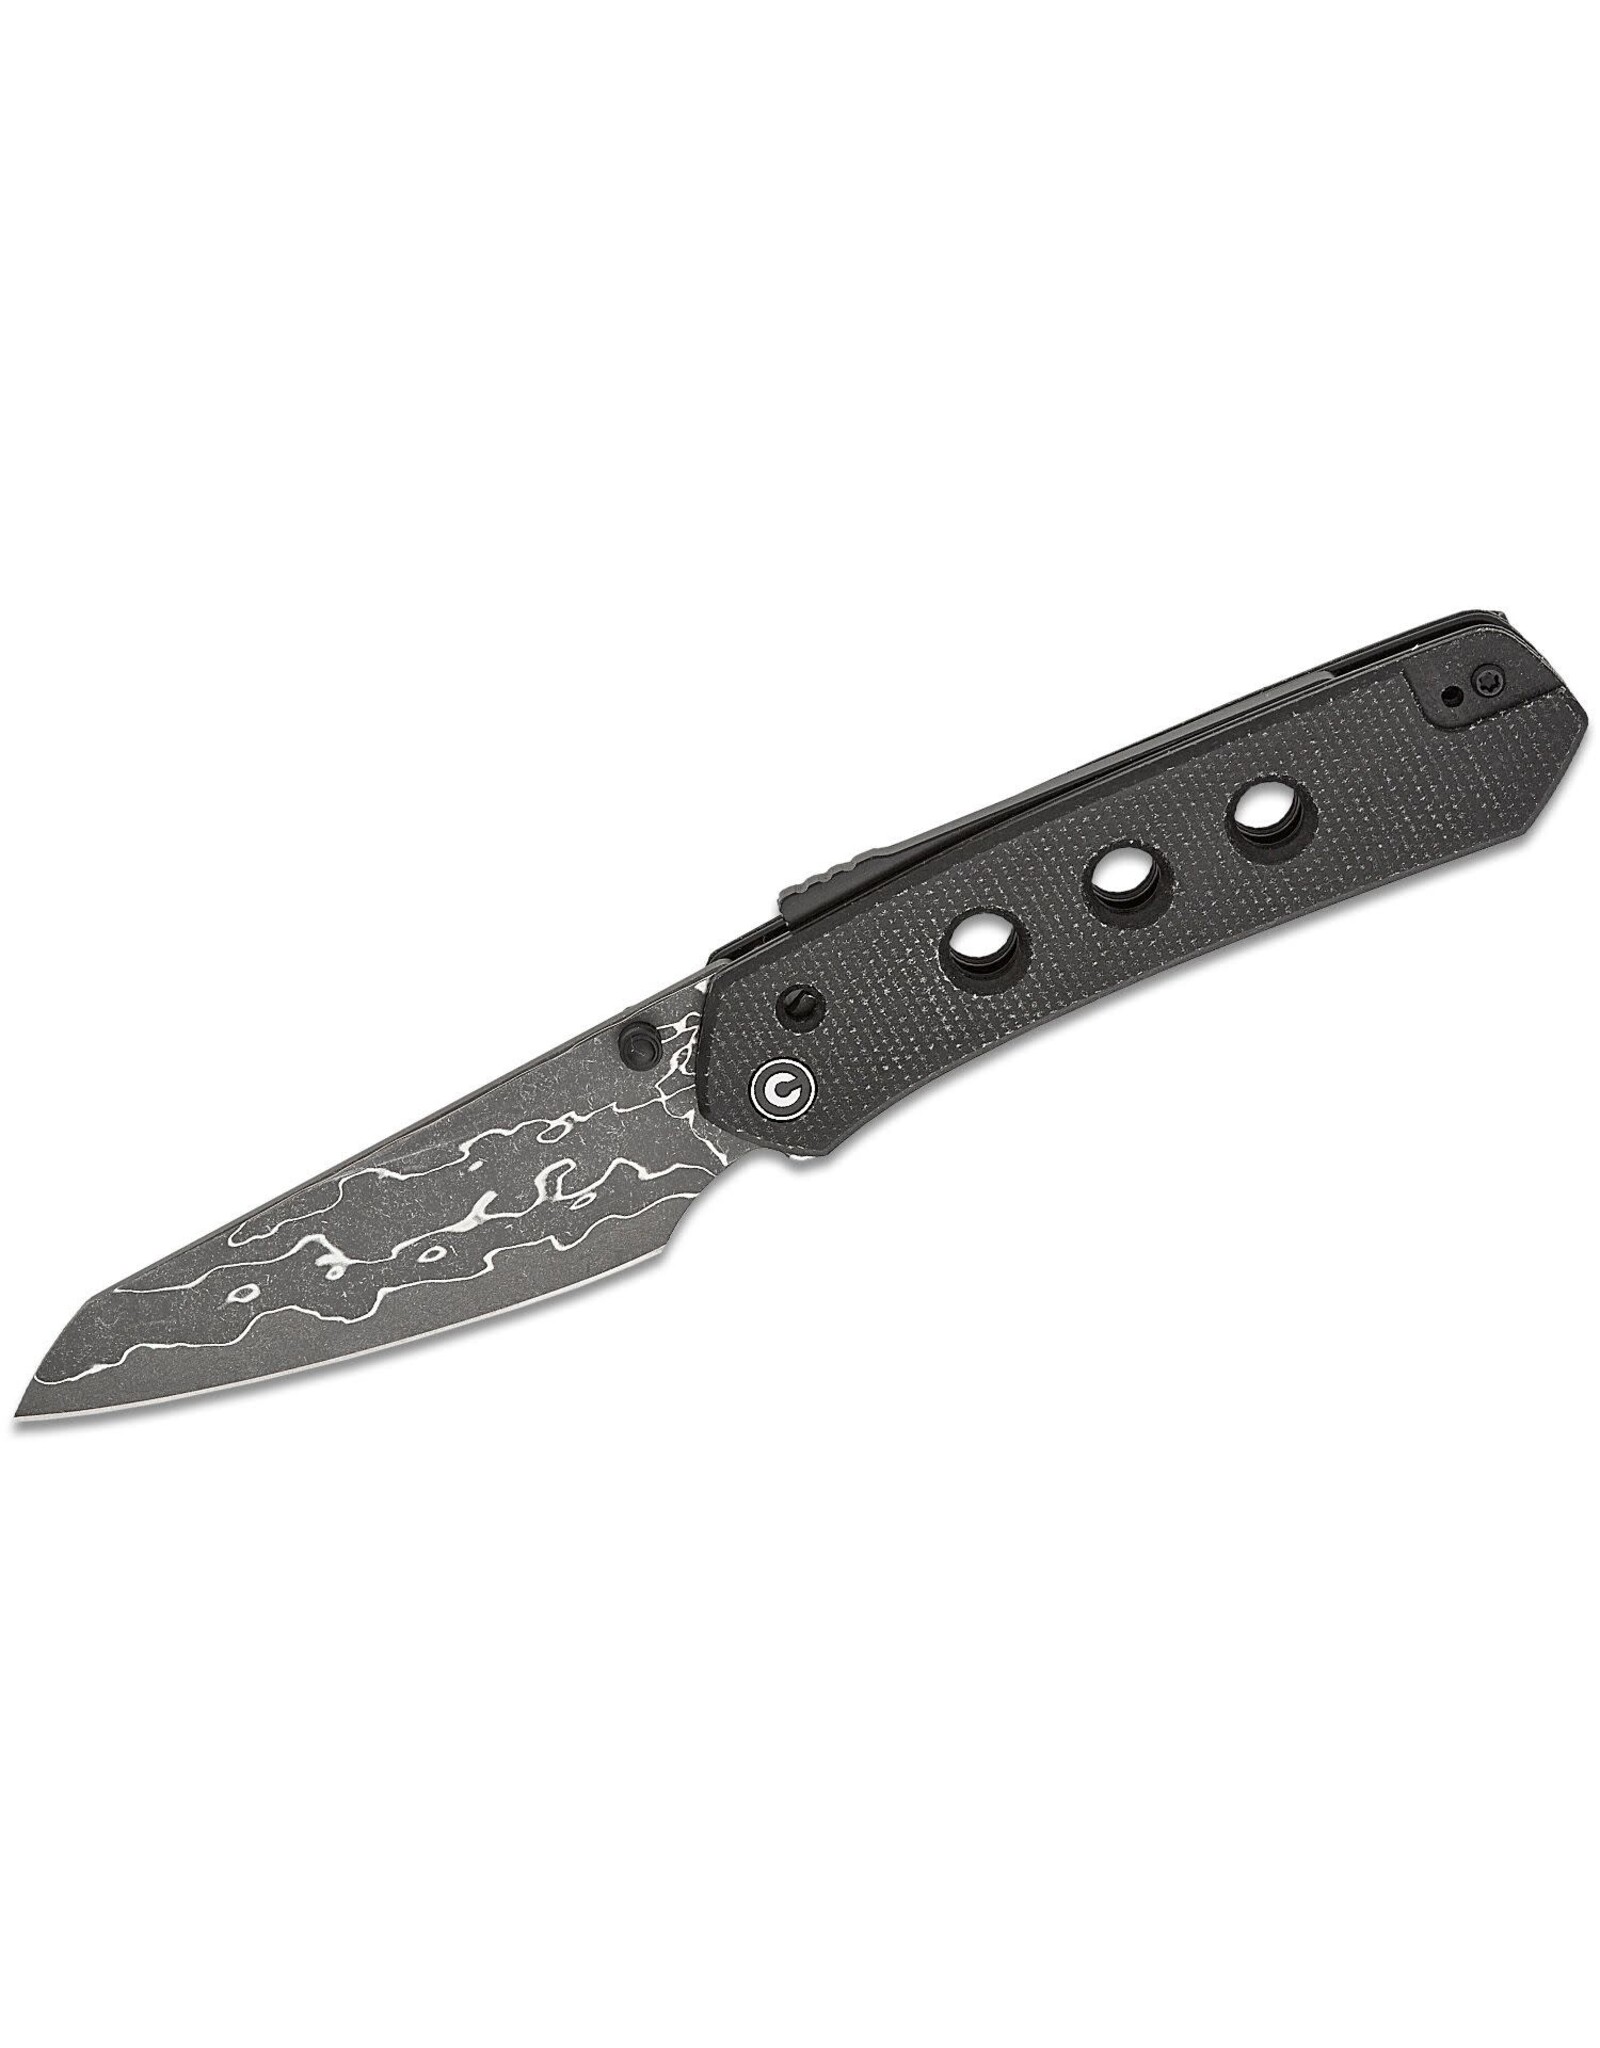 Civivi CIVIVI Knives Snecx Vision FG Superlock Folding Knife 3.54" Damascus Reverse Tanto Blade, Black Canvas Micarta Handles - C22036-DS2